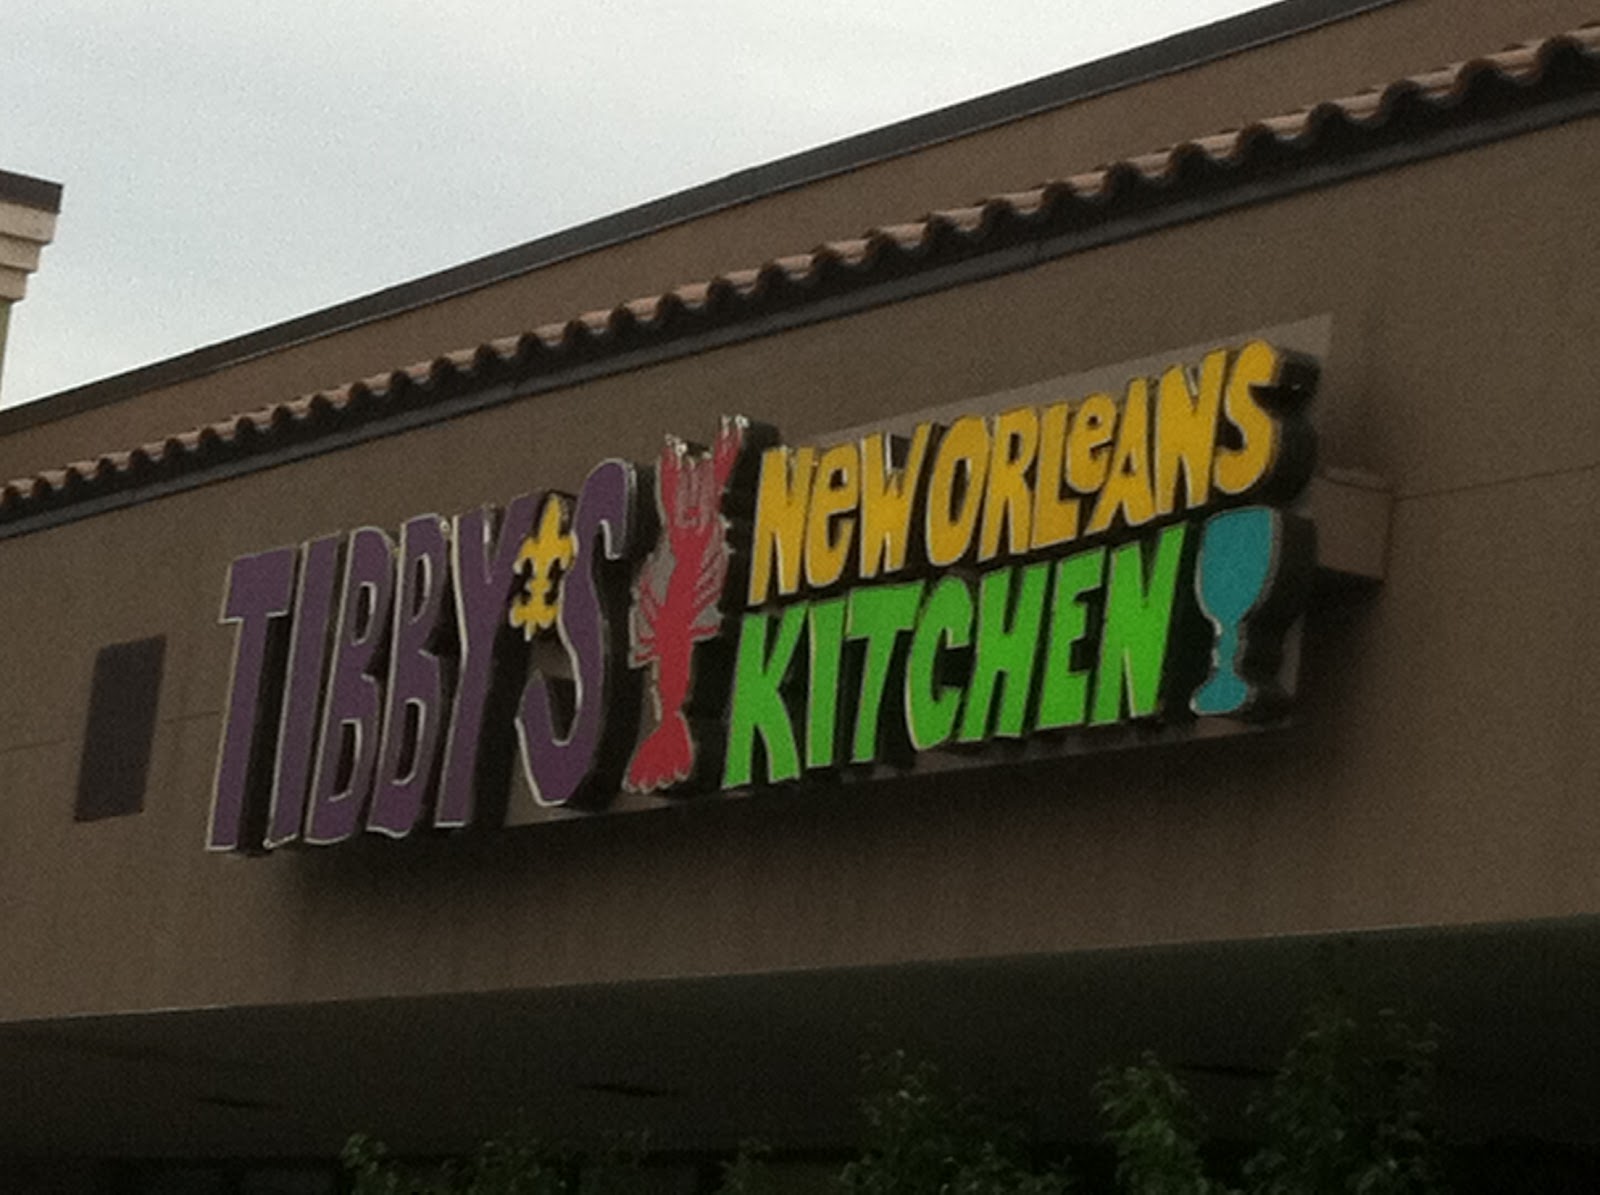 Tibby's New Orleans Kitchen ~ Taste & Travel